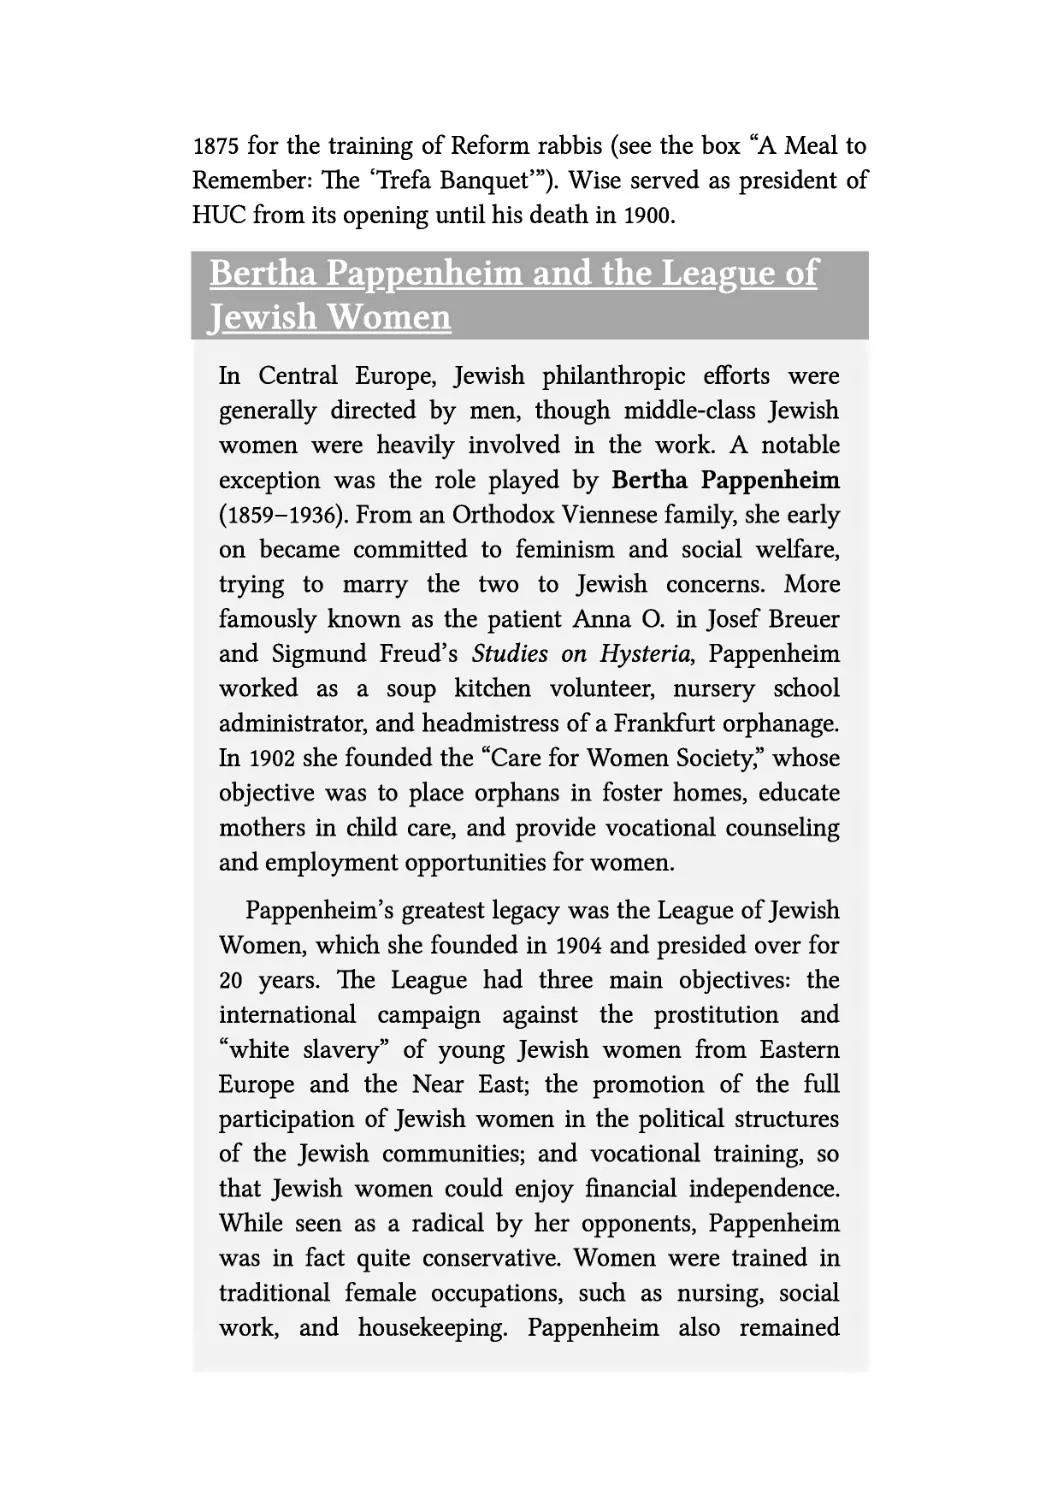 Bertha Pappenheim and the League of Jewish Women